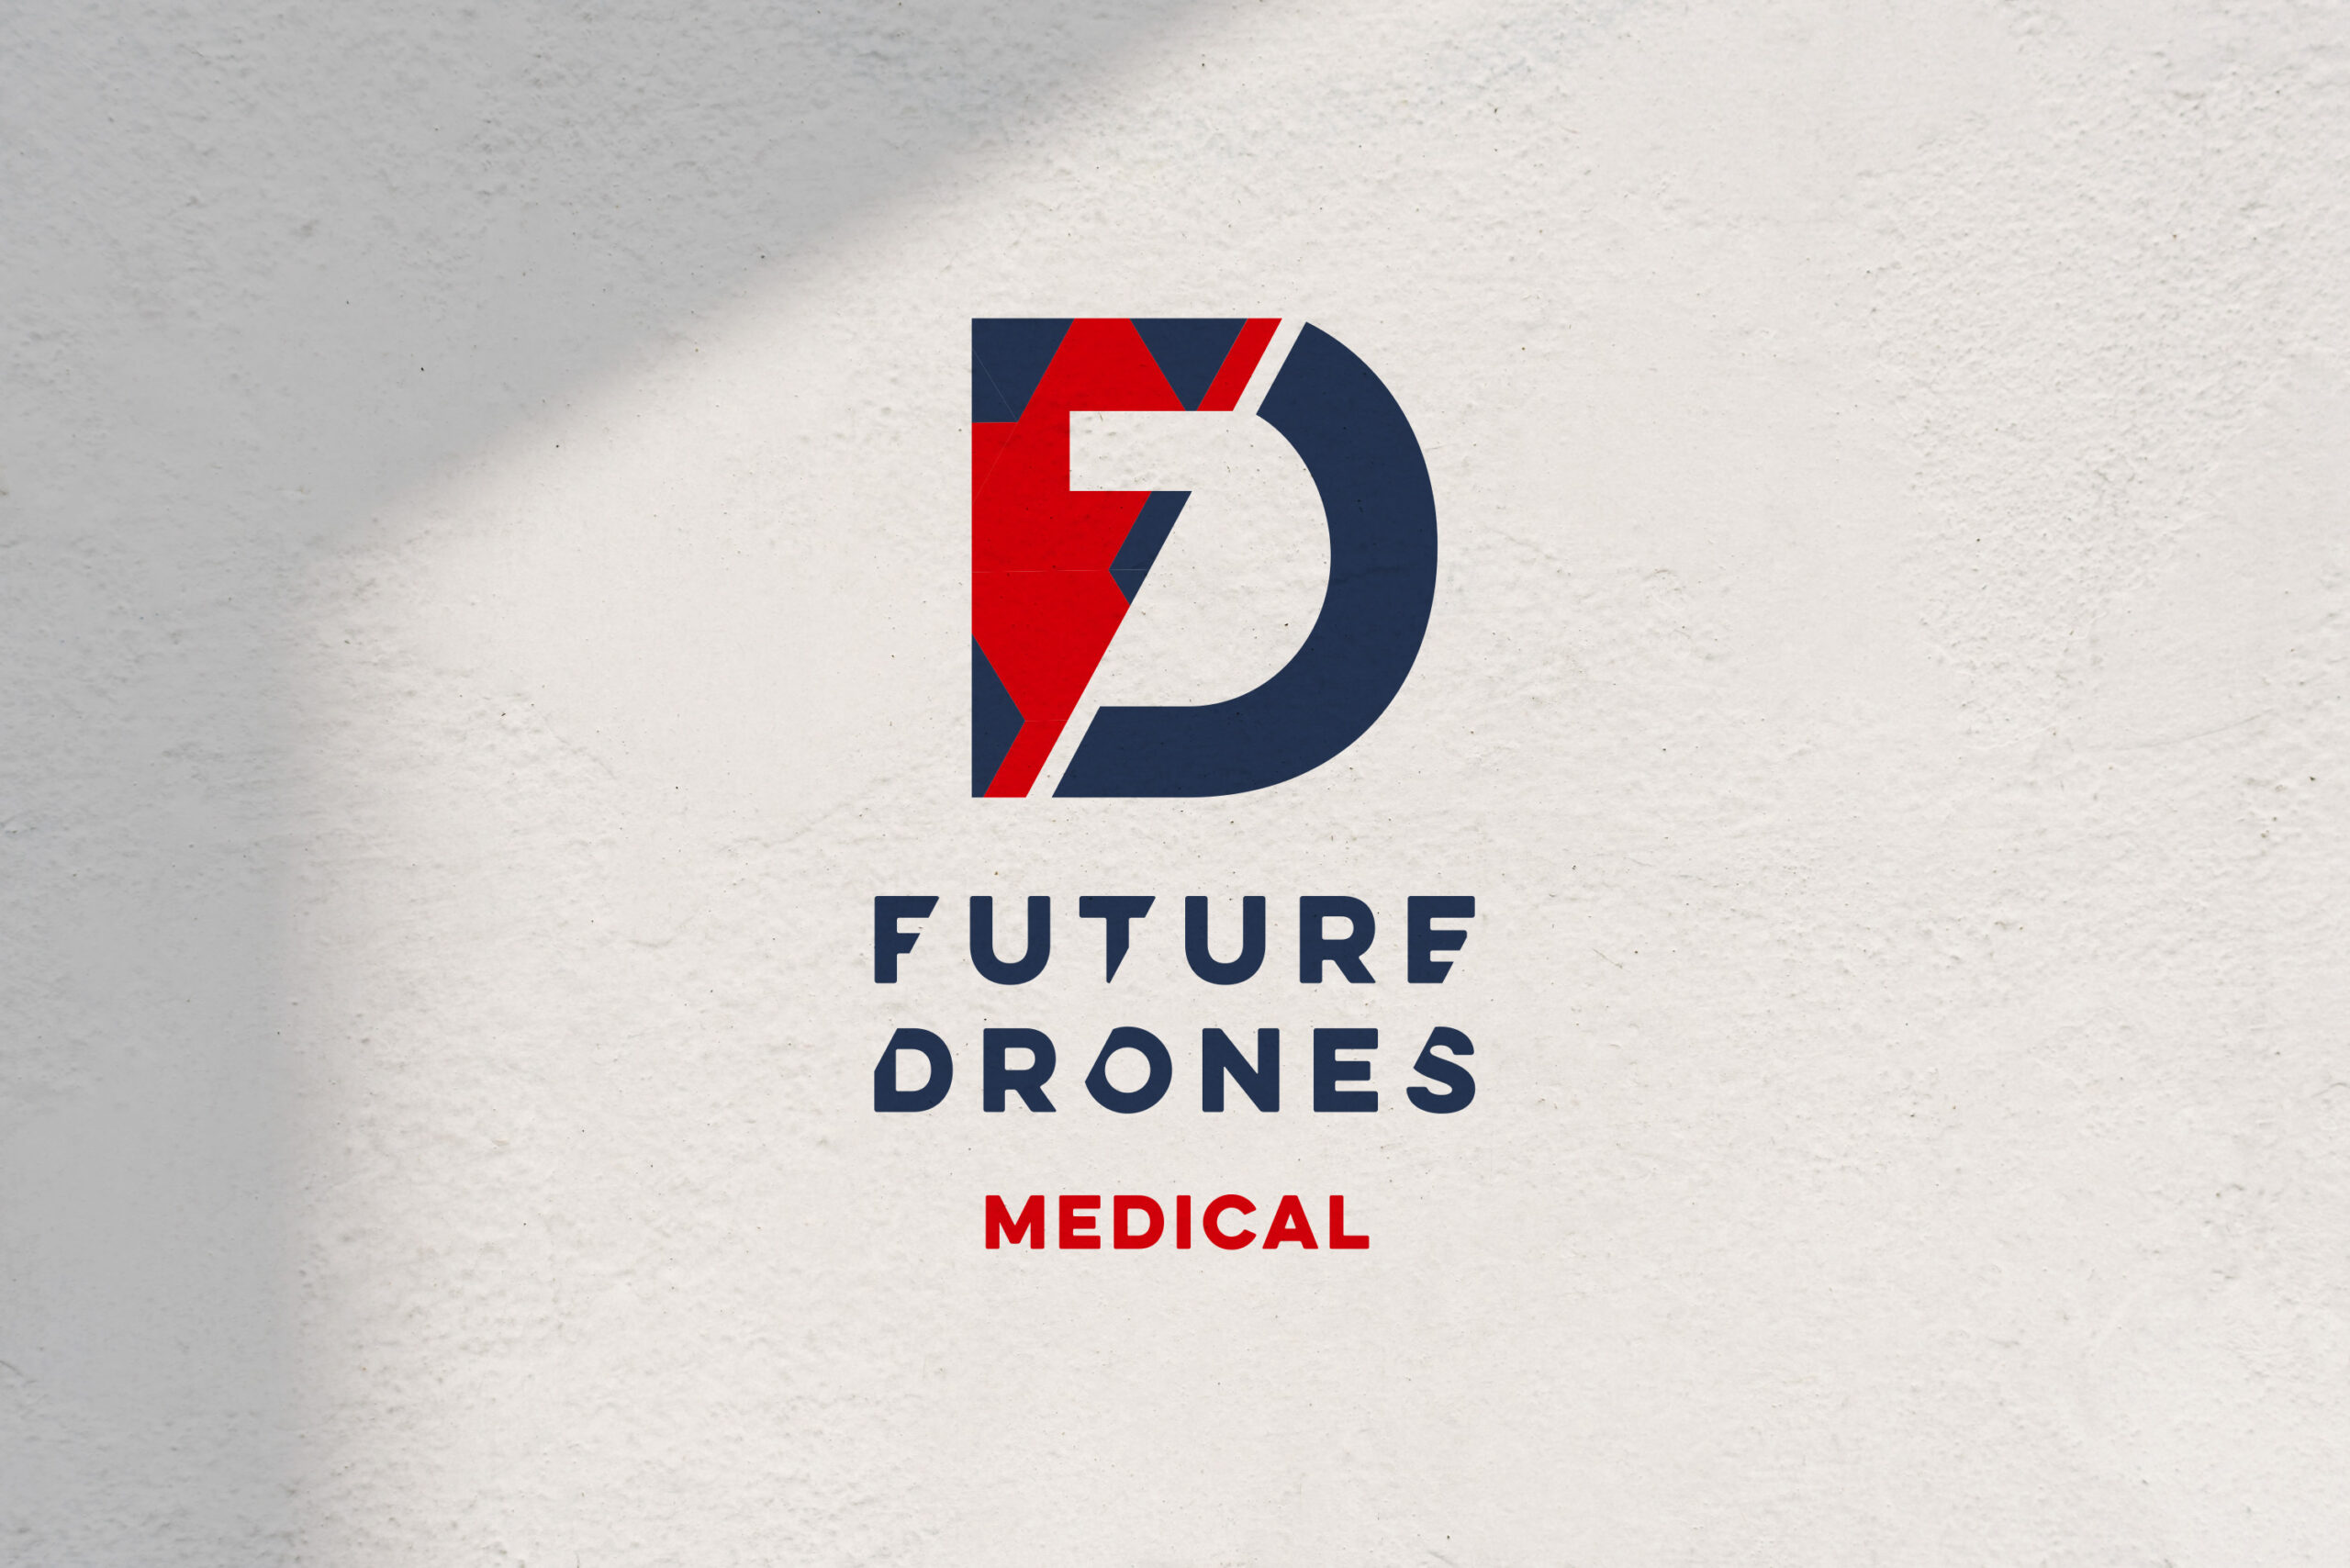 Medical drone logo